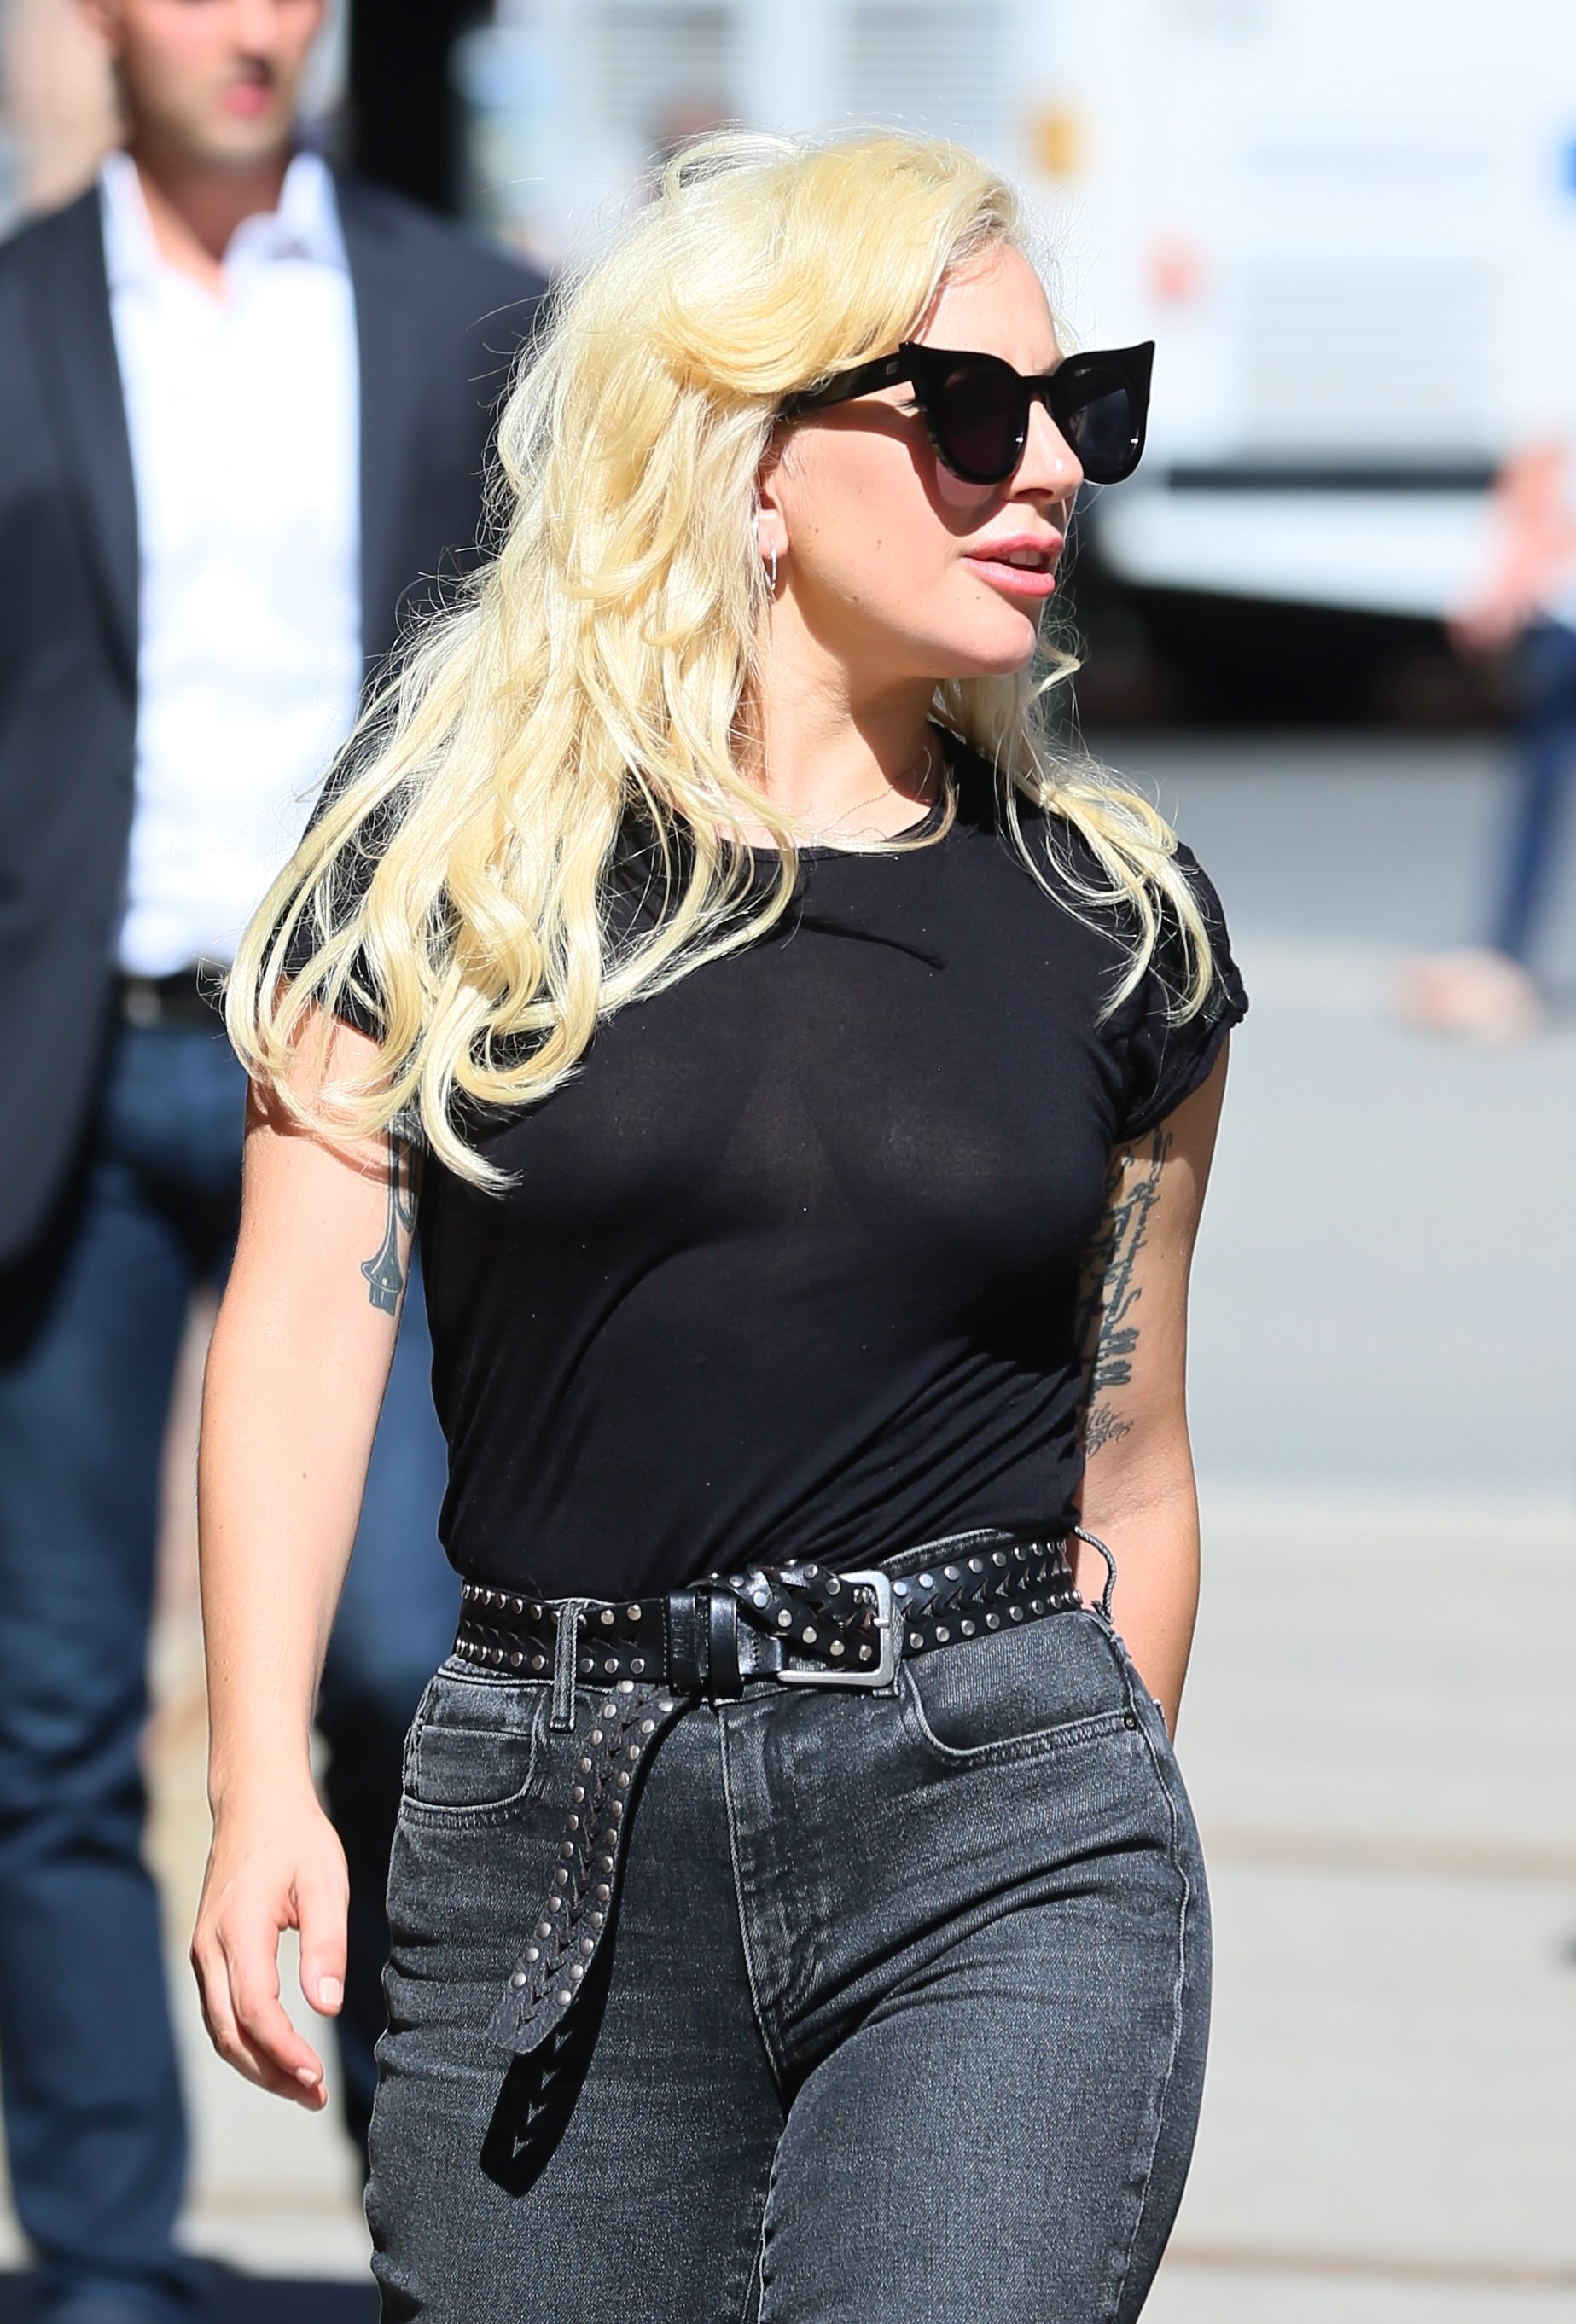 Braless Photos of Lady Gaga #79626982